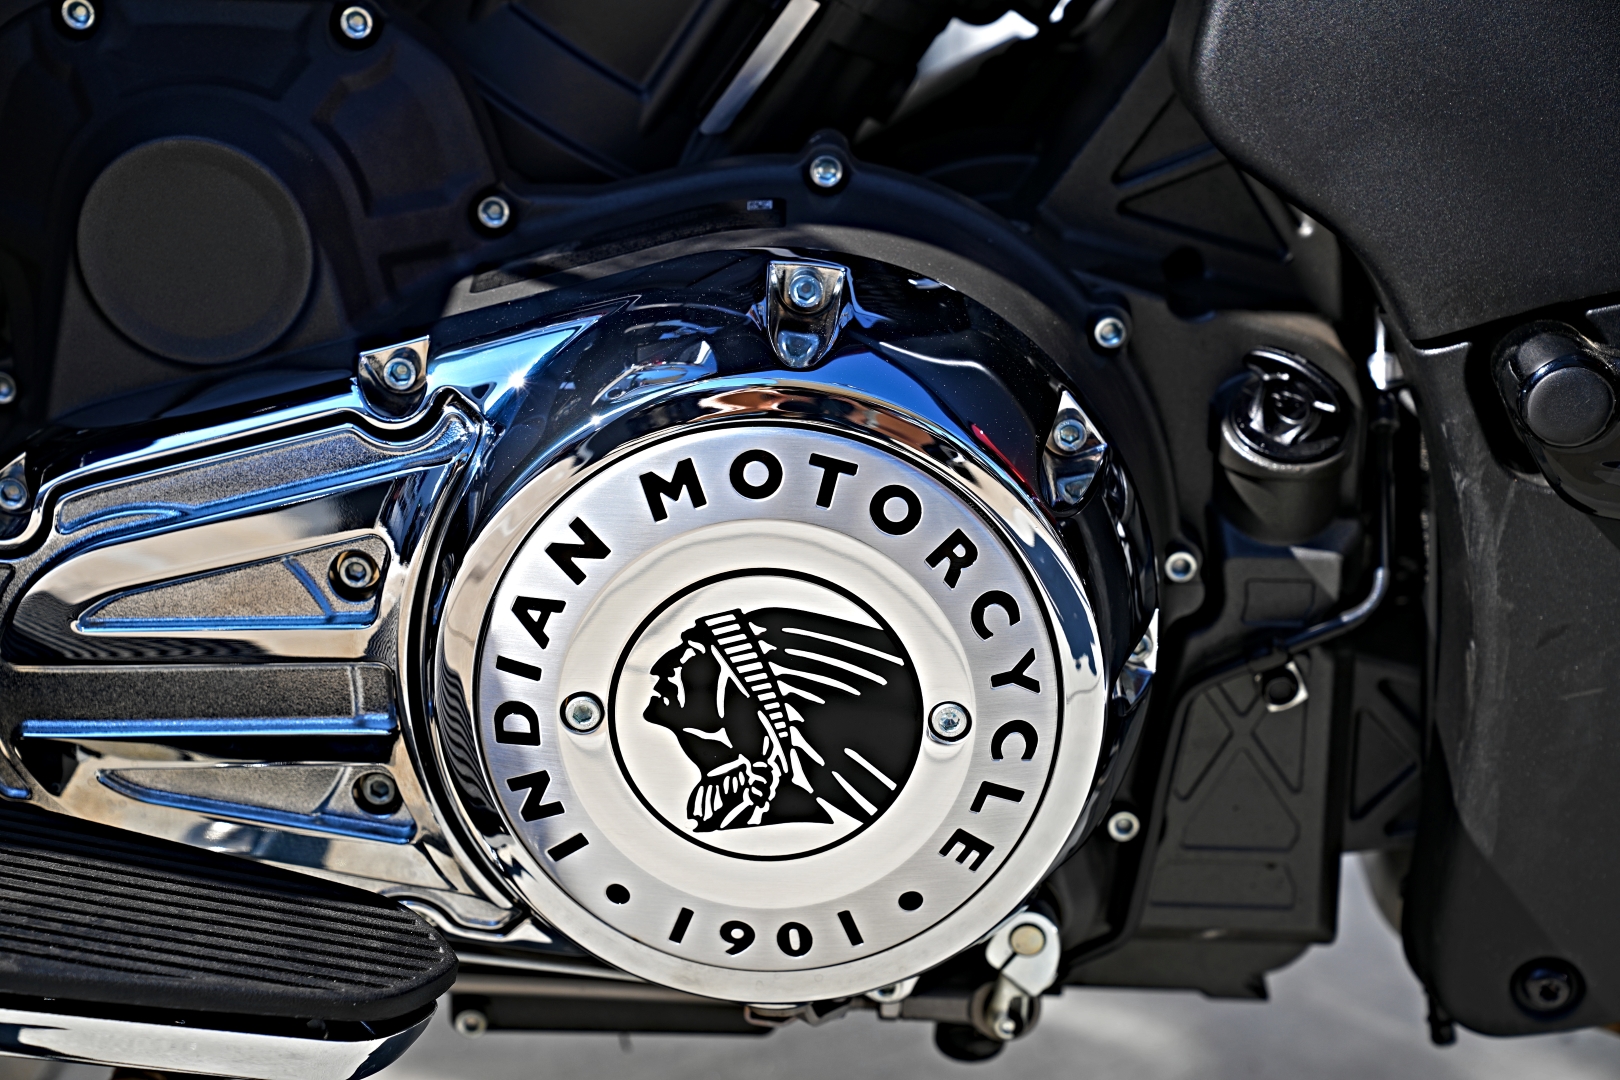 Closeup of the Indian Motorcycle logo